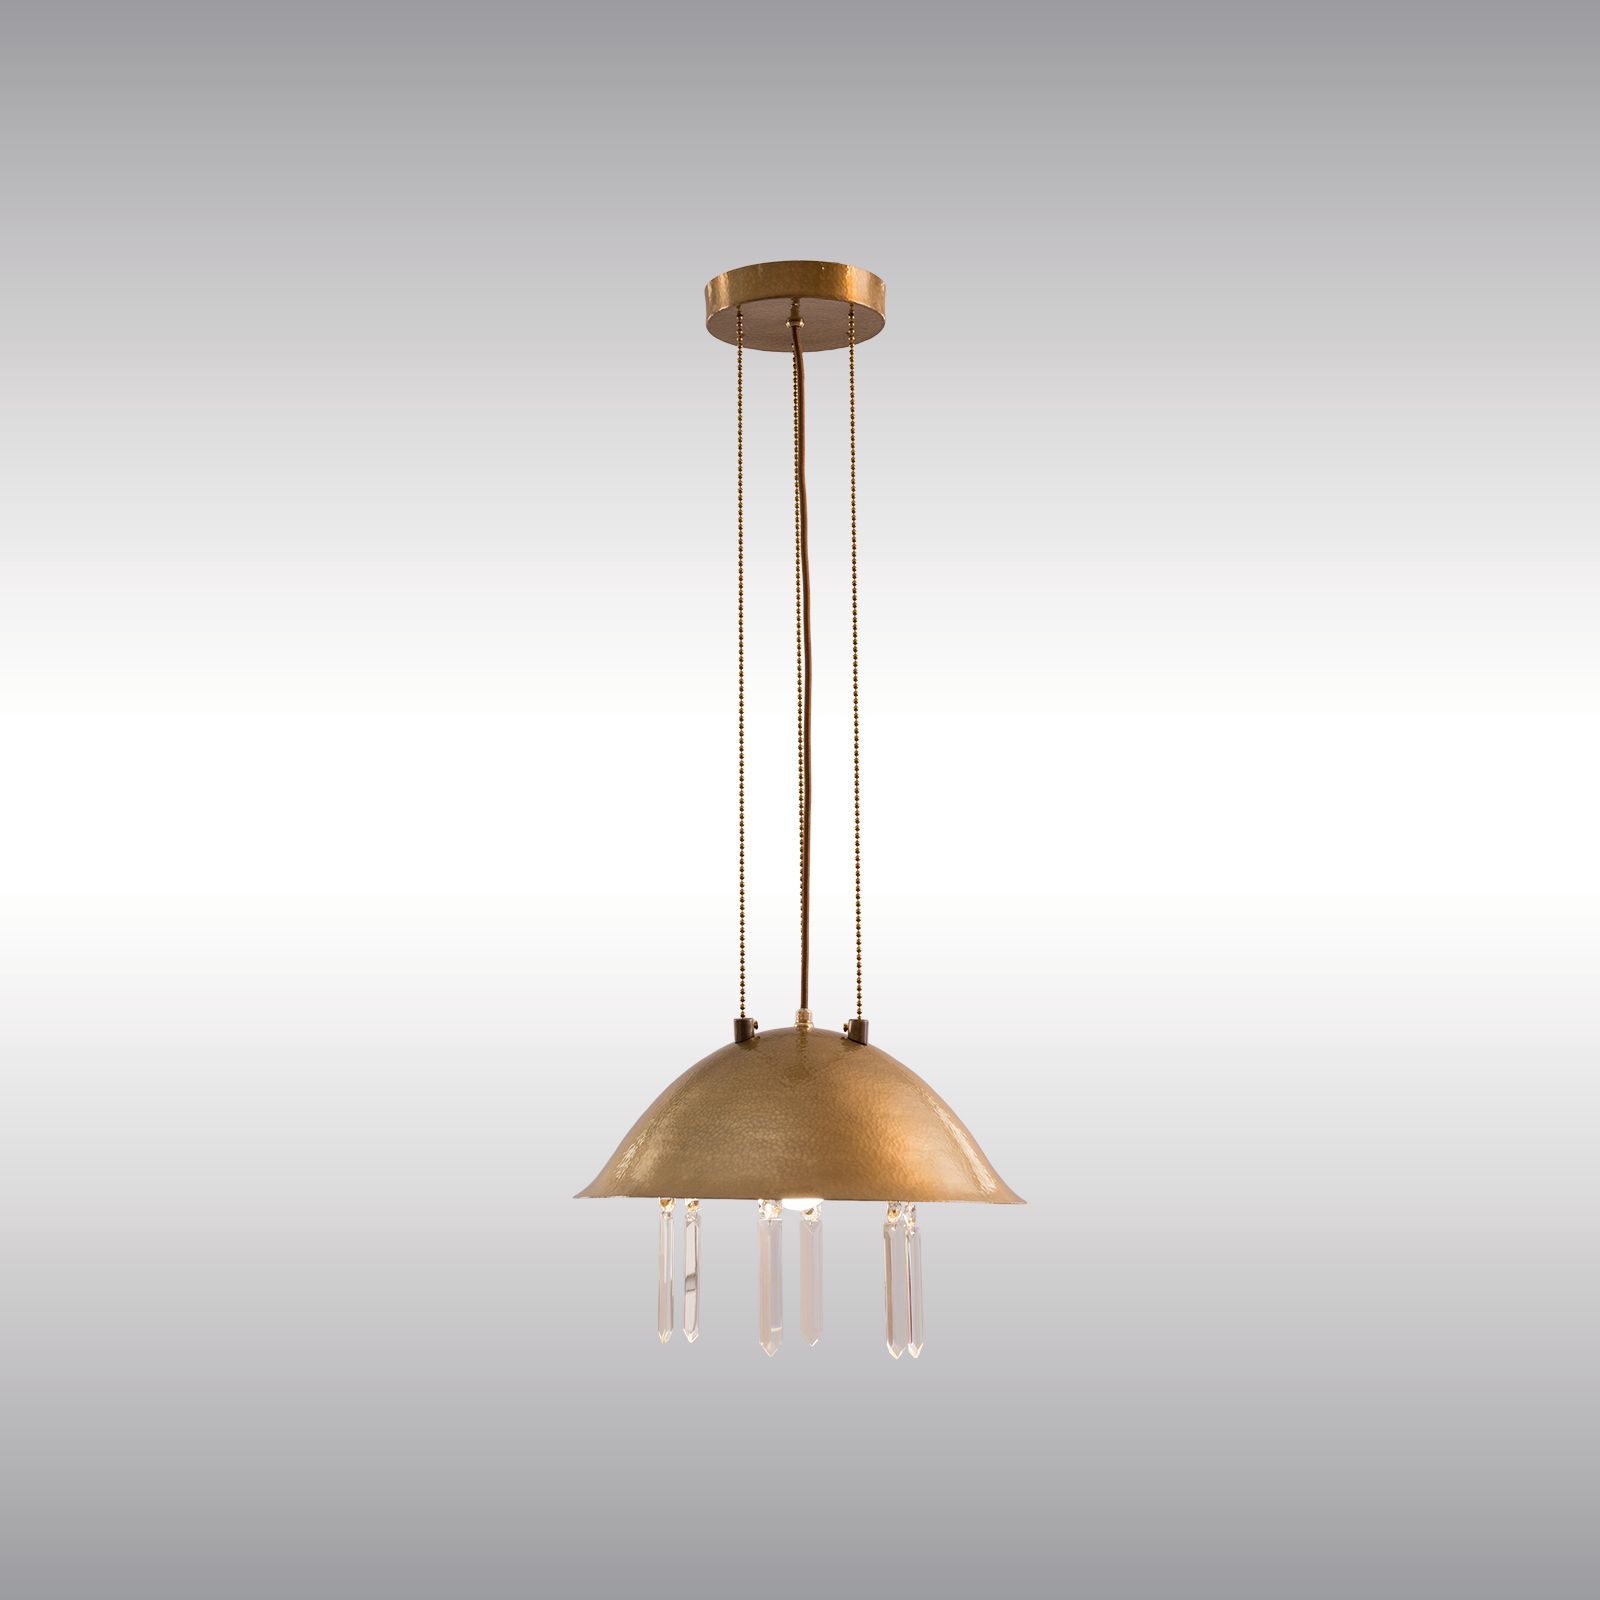 WOKA LAMPS VIENNA - OrderNr.: 22206|Dining 1 Hammered Version - Design: Josef Hoffmann